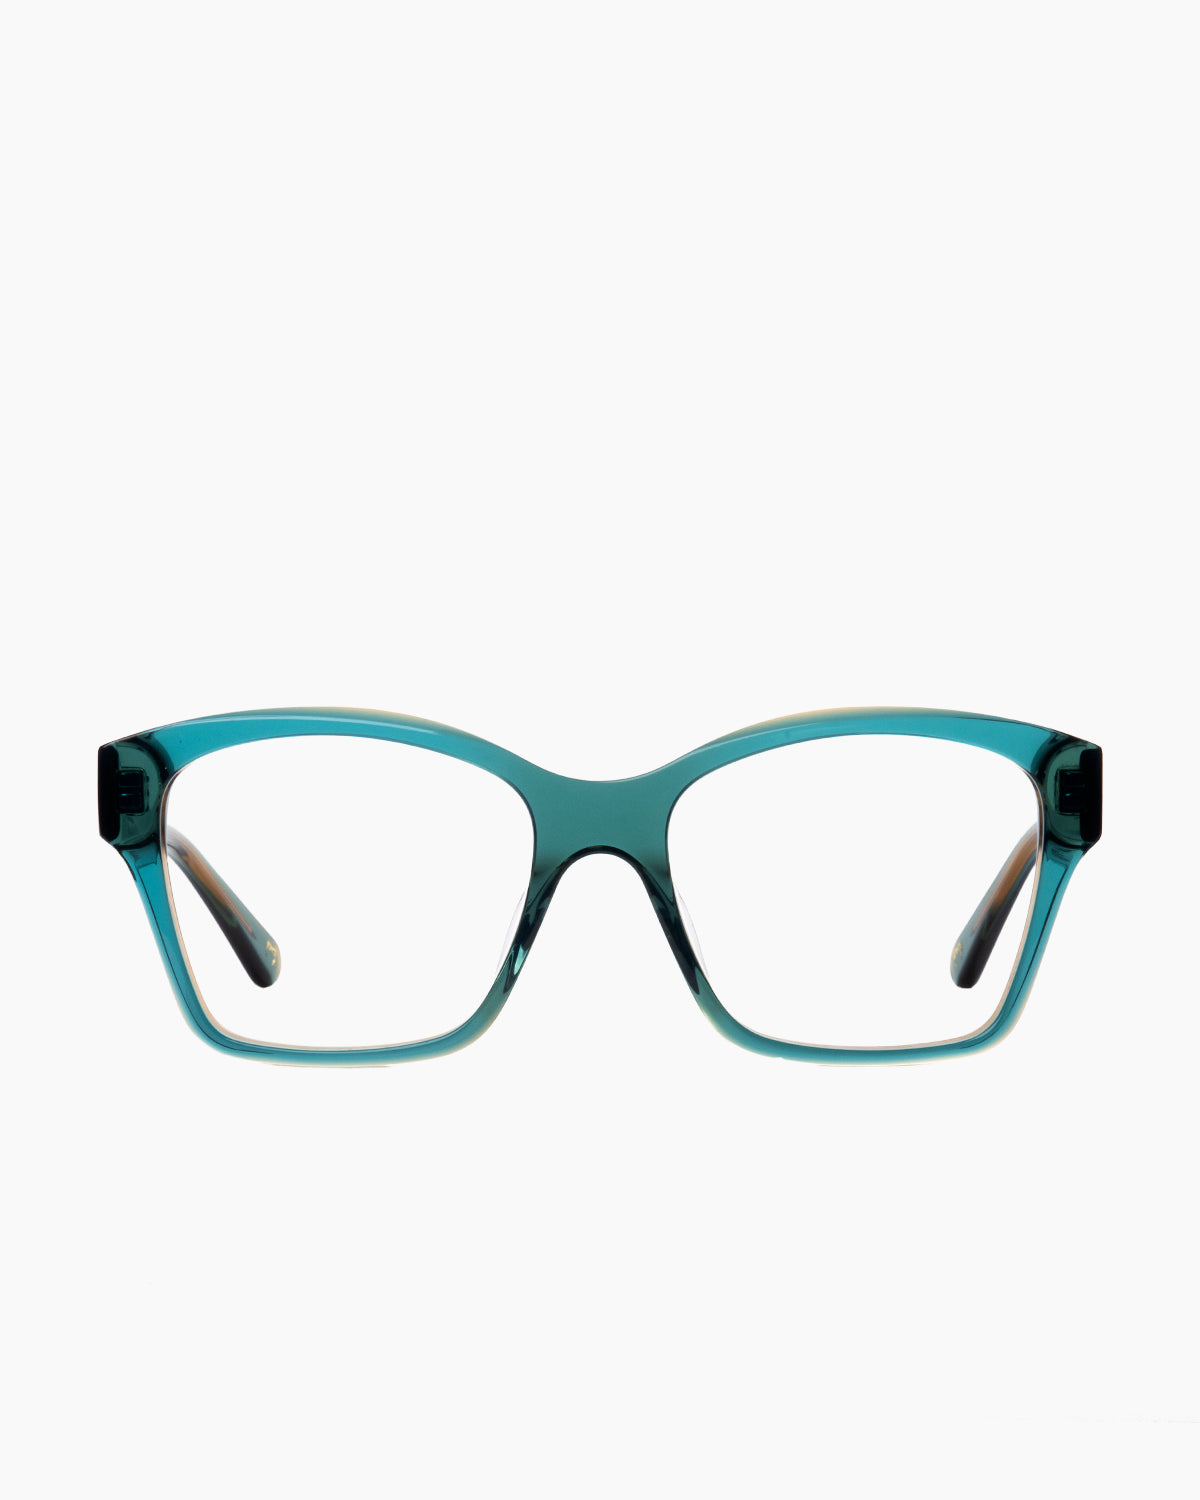 Spectacleeyeworks - Riley - c736 | Bar à lunettes